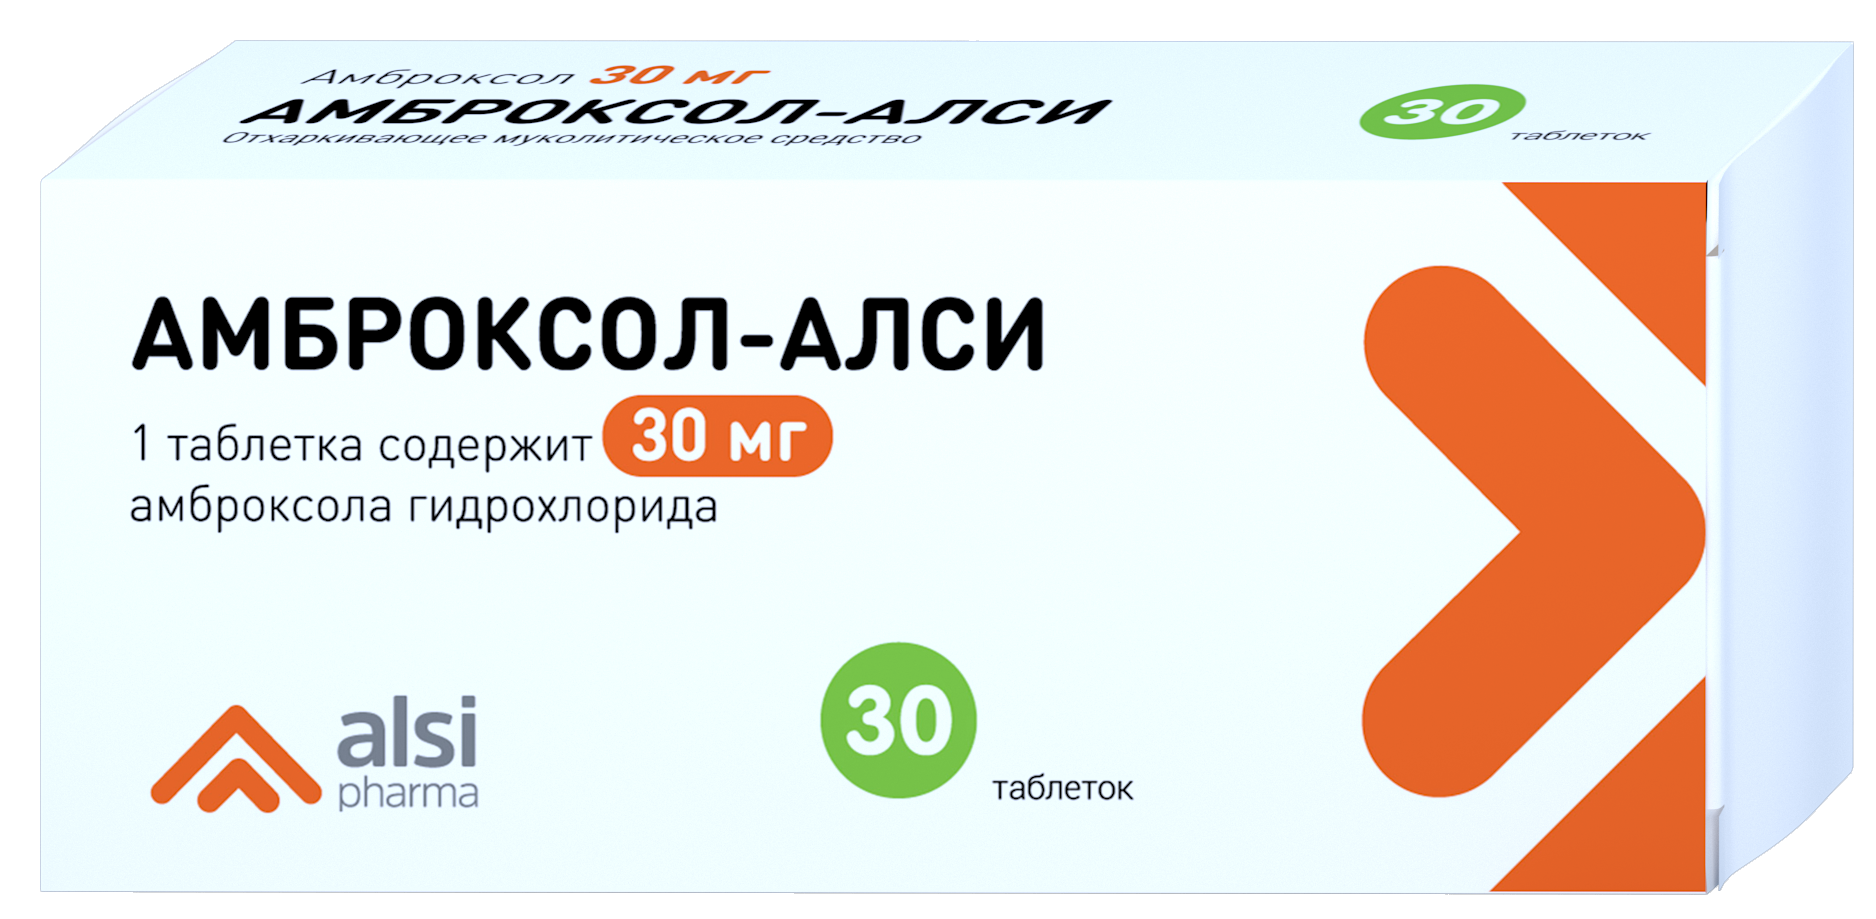 Амброксол-АЛСИ, таблетки 30 мг, 30 шт. амброксол таблетки 30 мг 50 шт